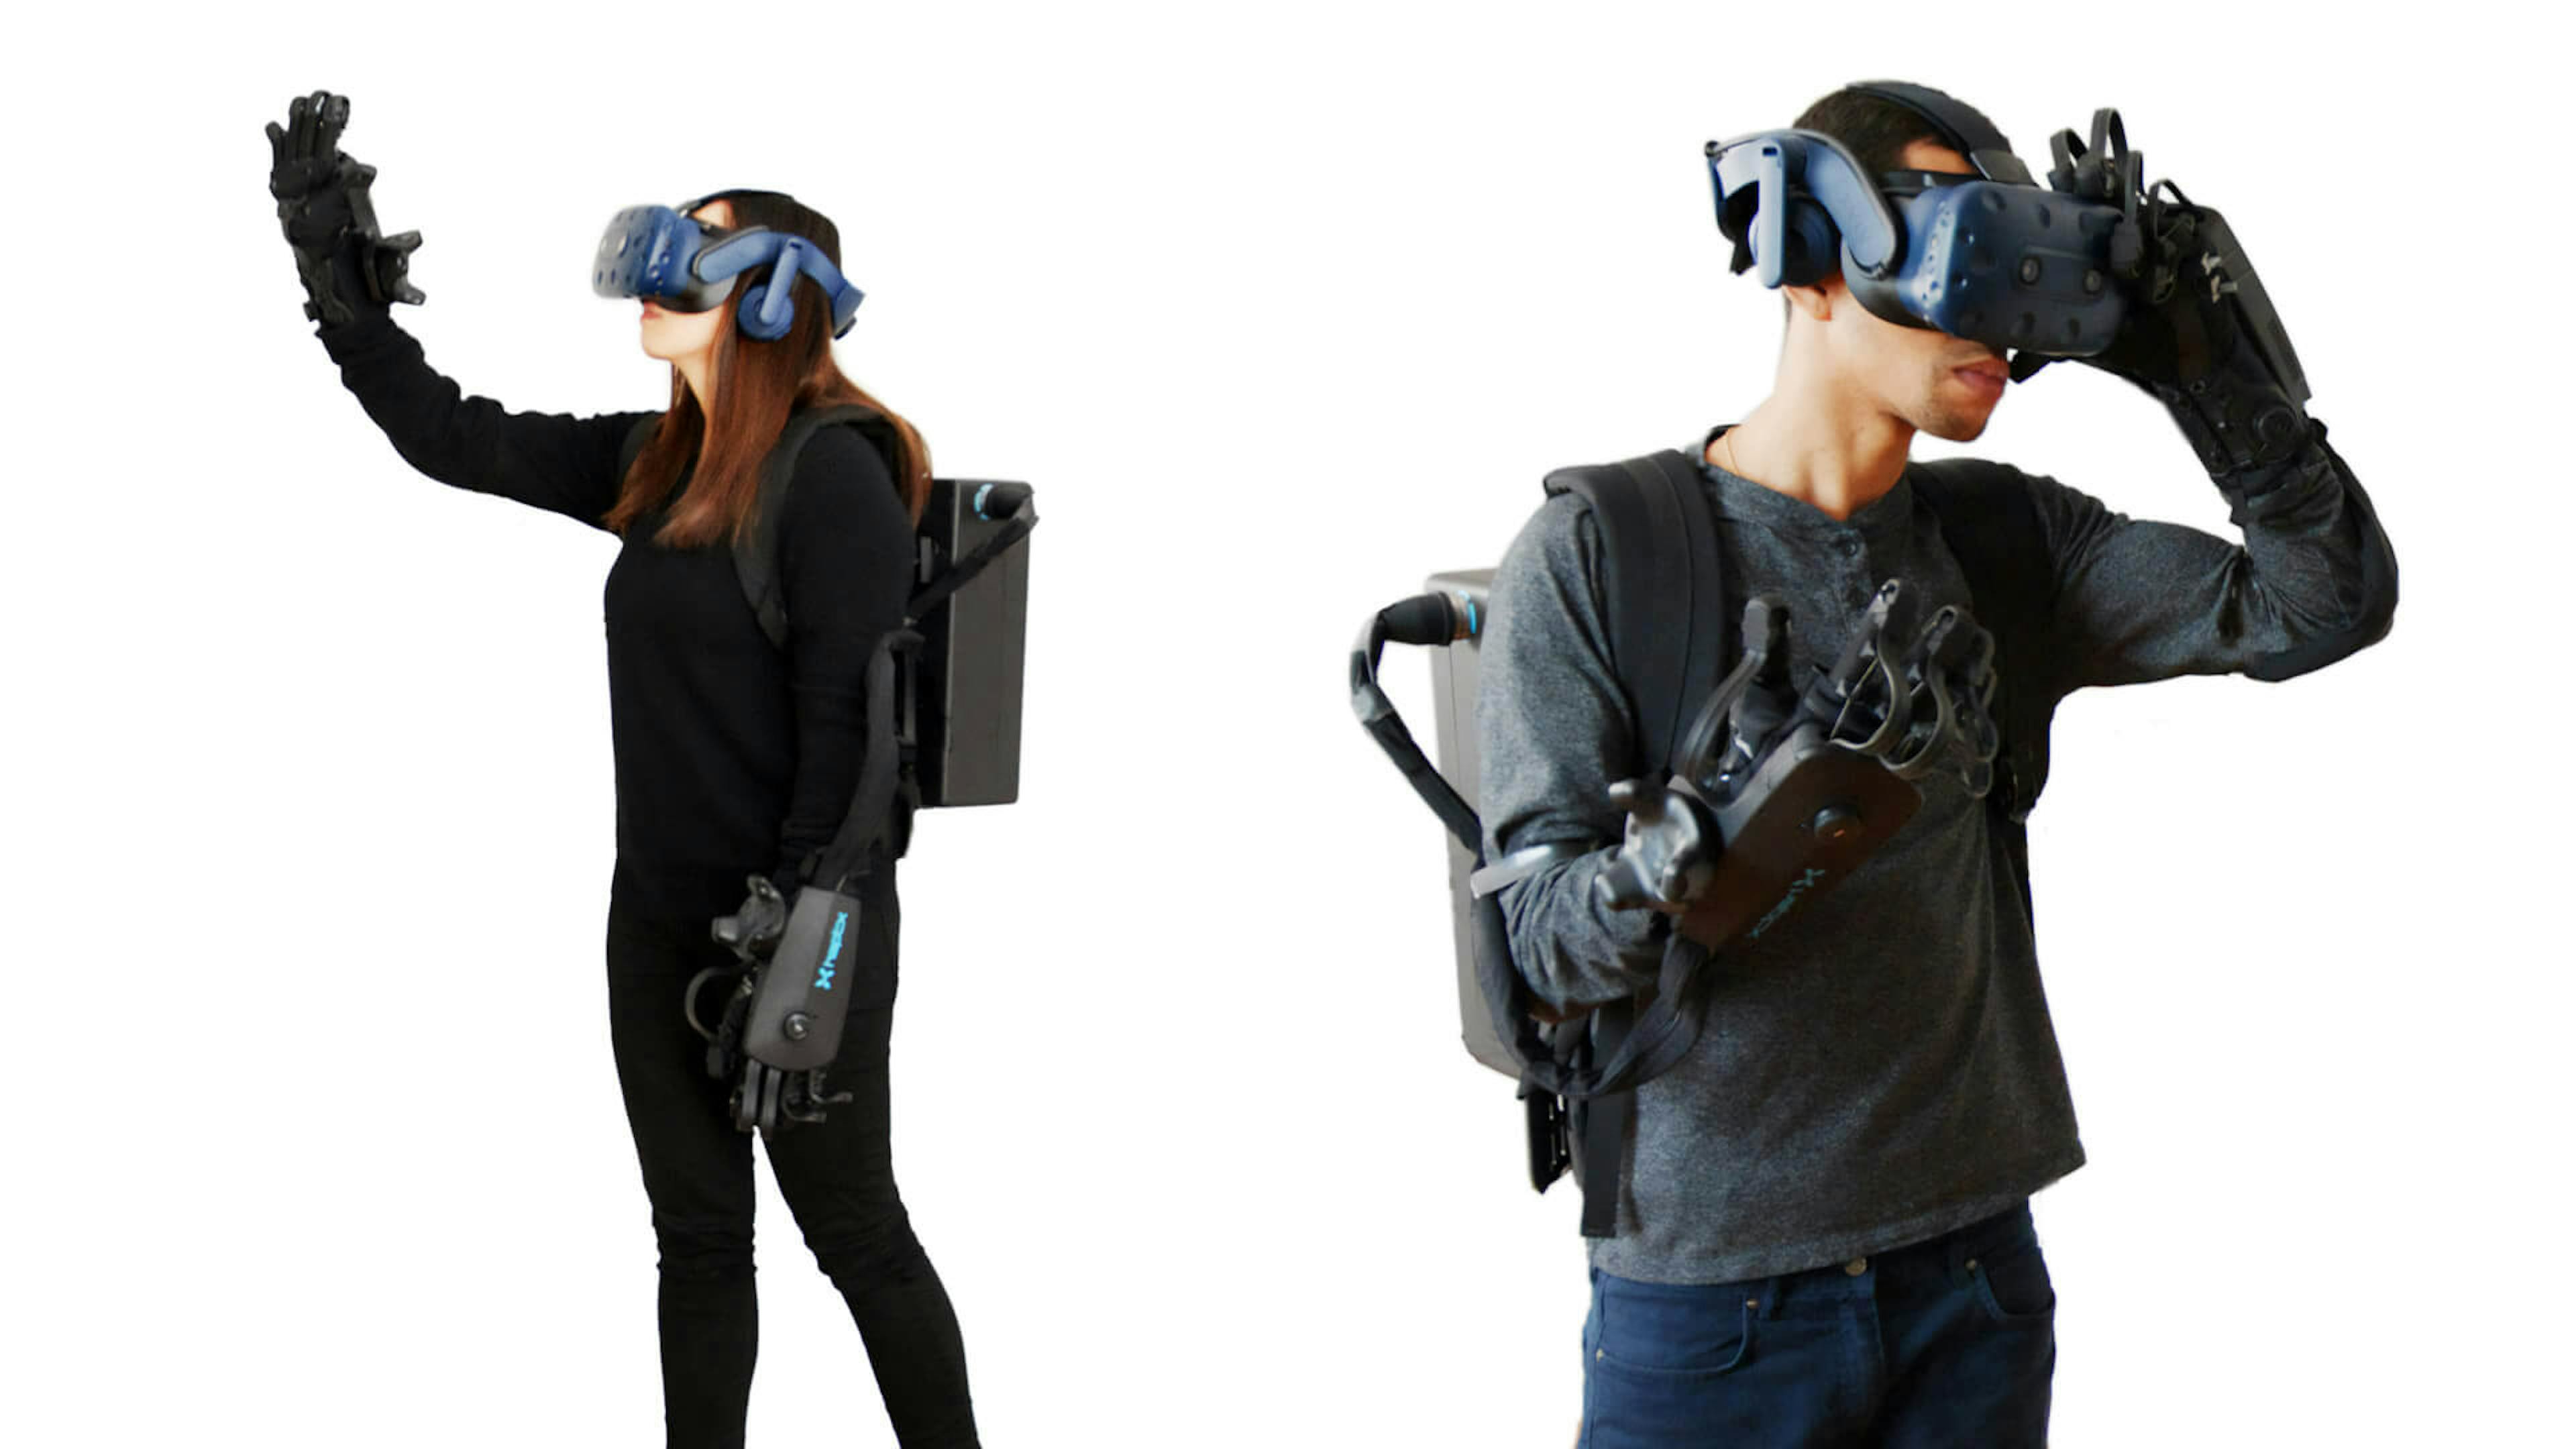 HaptX haptic glove and HTC Vive VR glasses